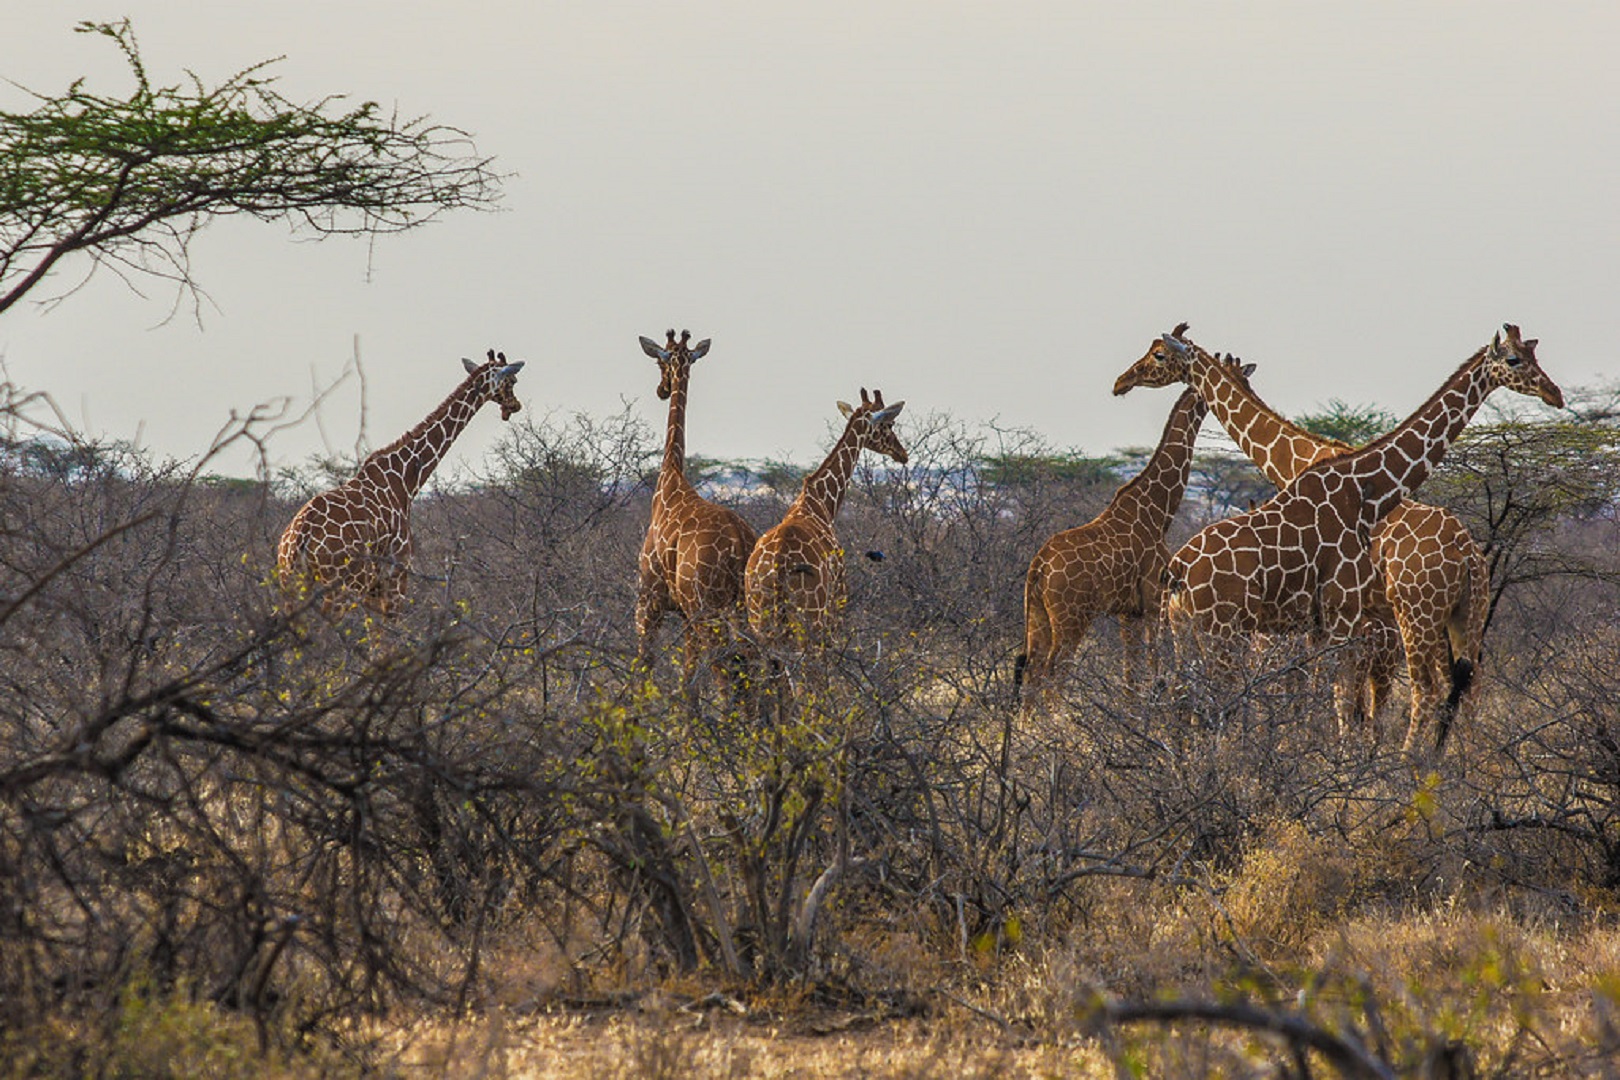 An encounter with Giraffes of Semuliki Wildlife Reserve